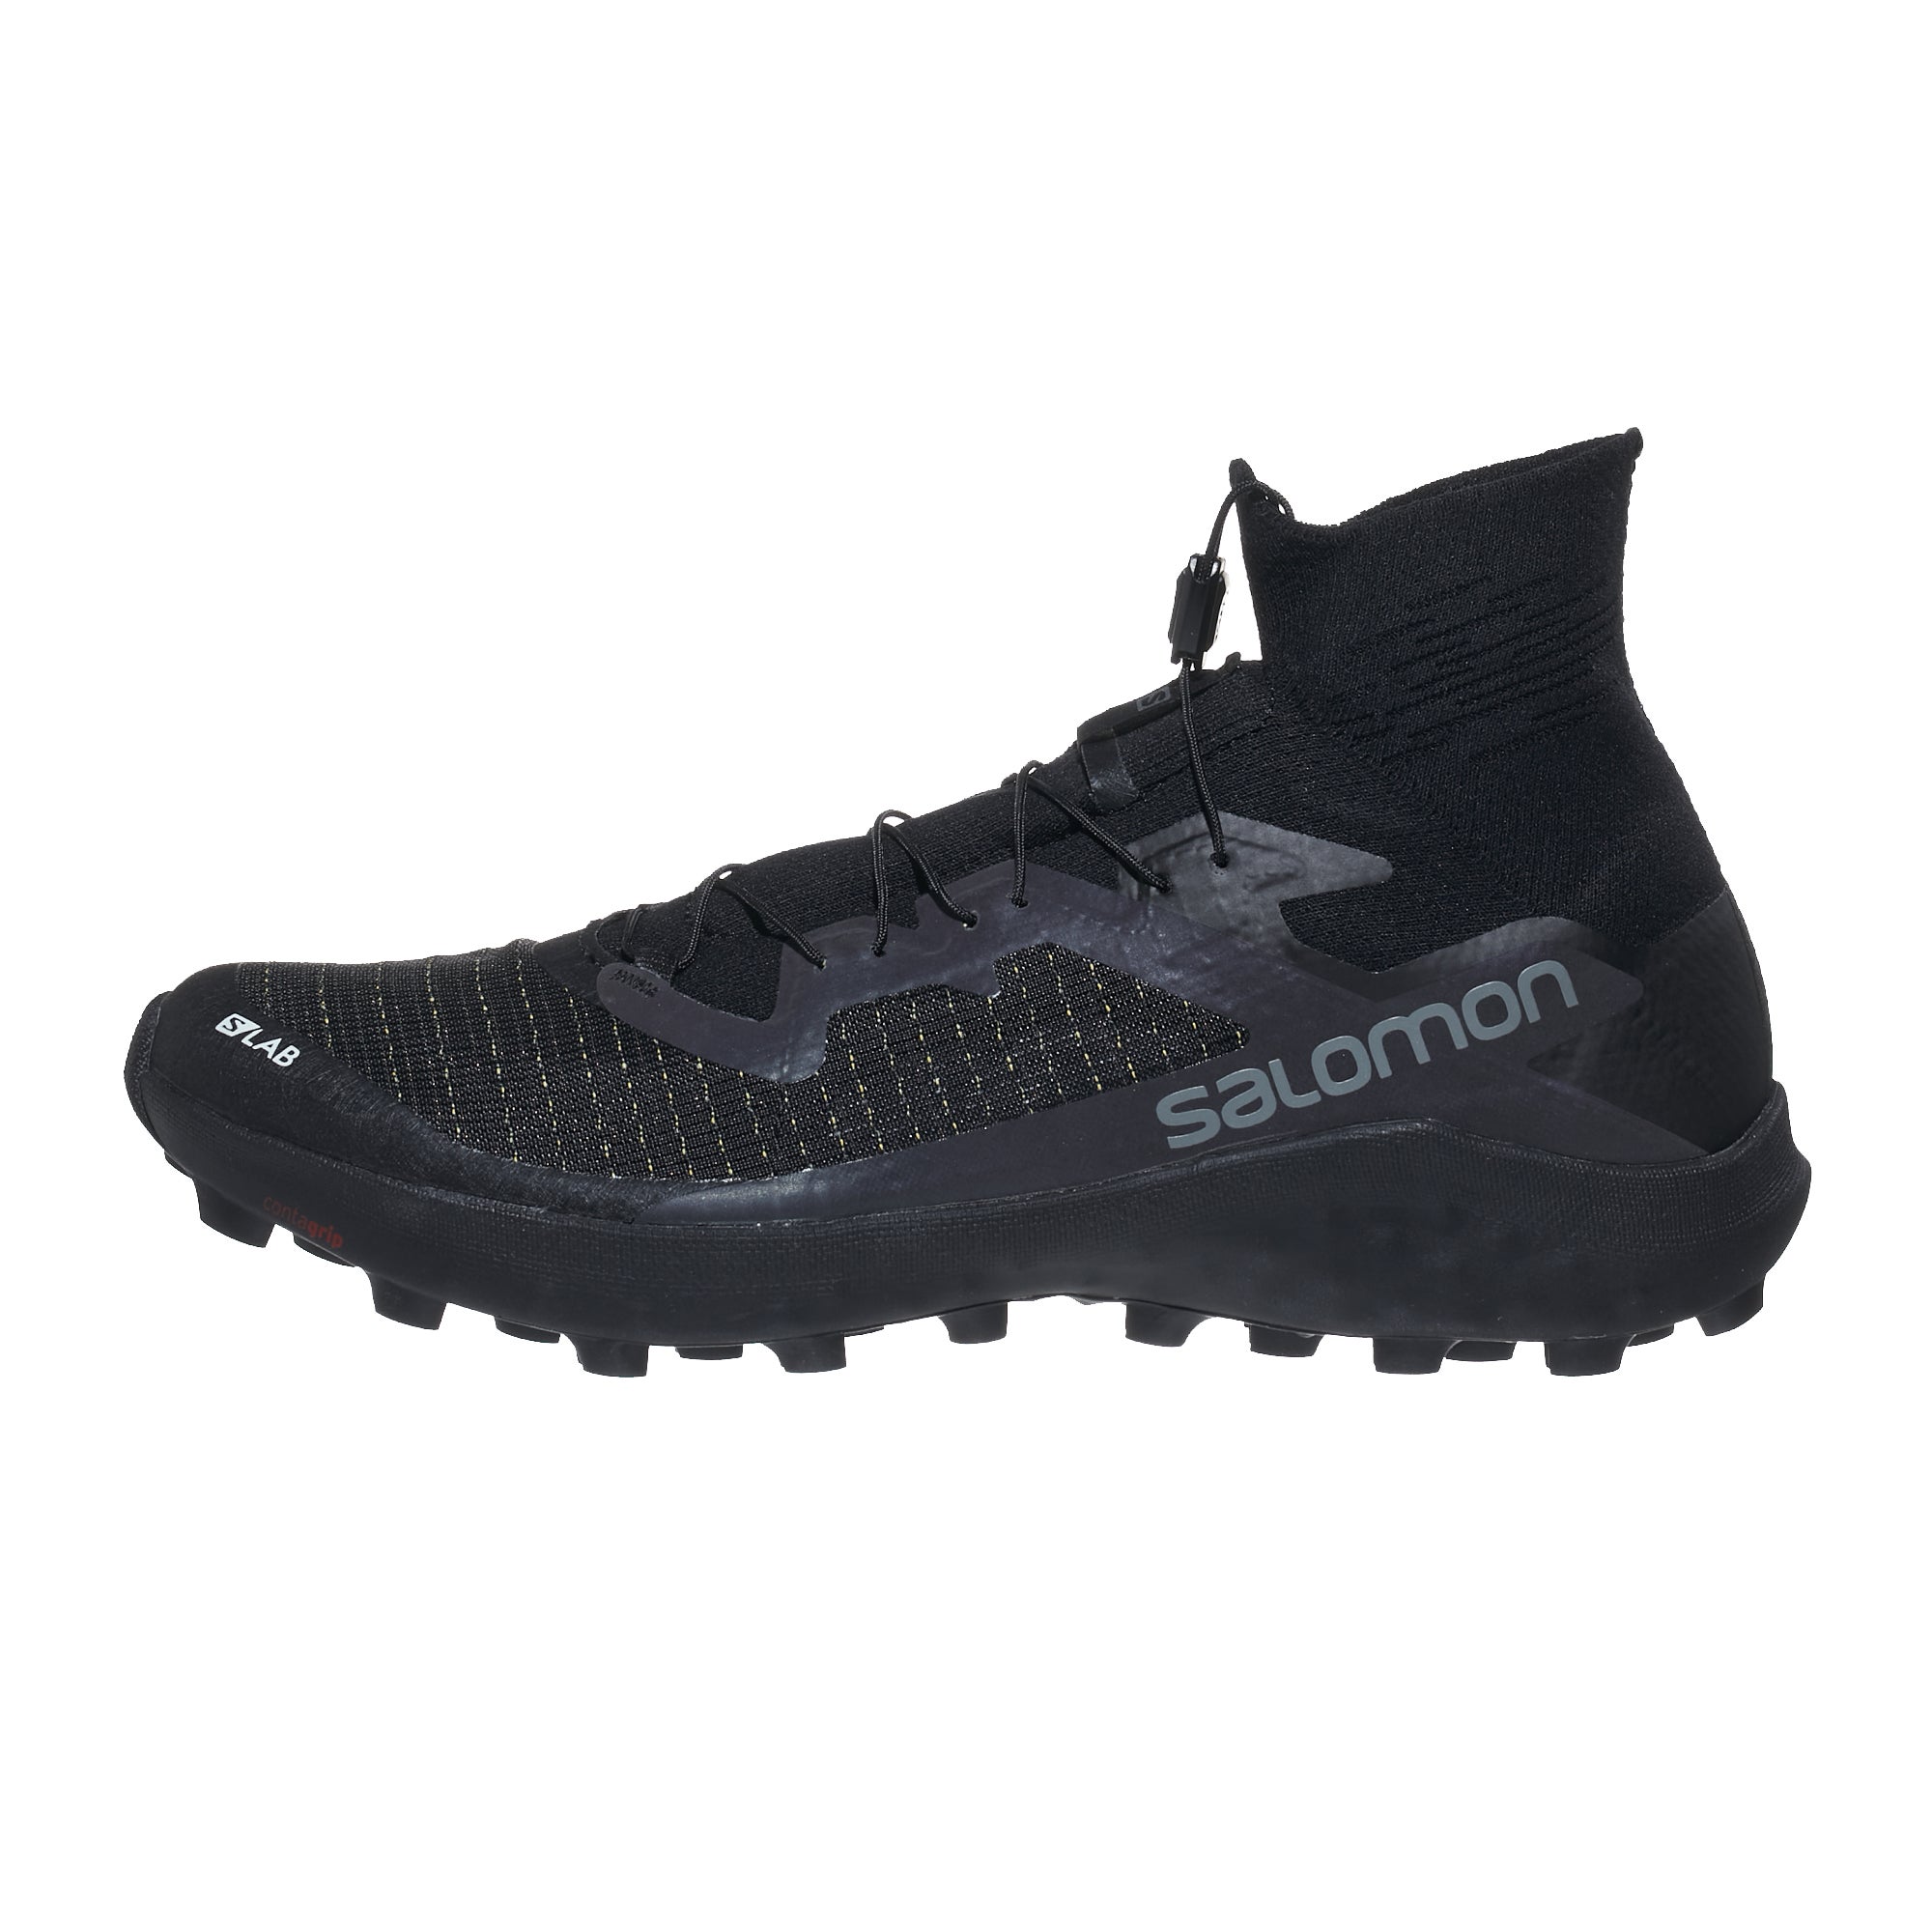 Salomon S-Lab Cross 2 Unisex Shoes Black/Black 360° View | Running ...